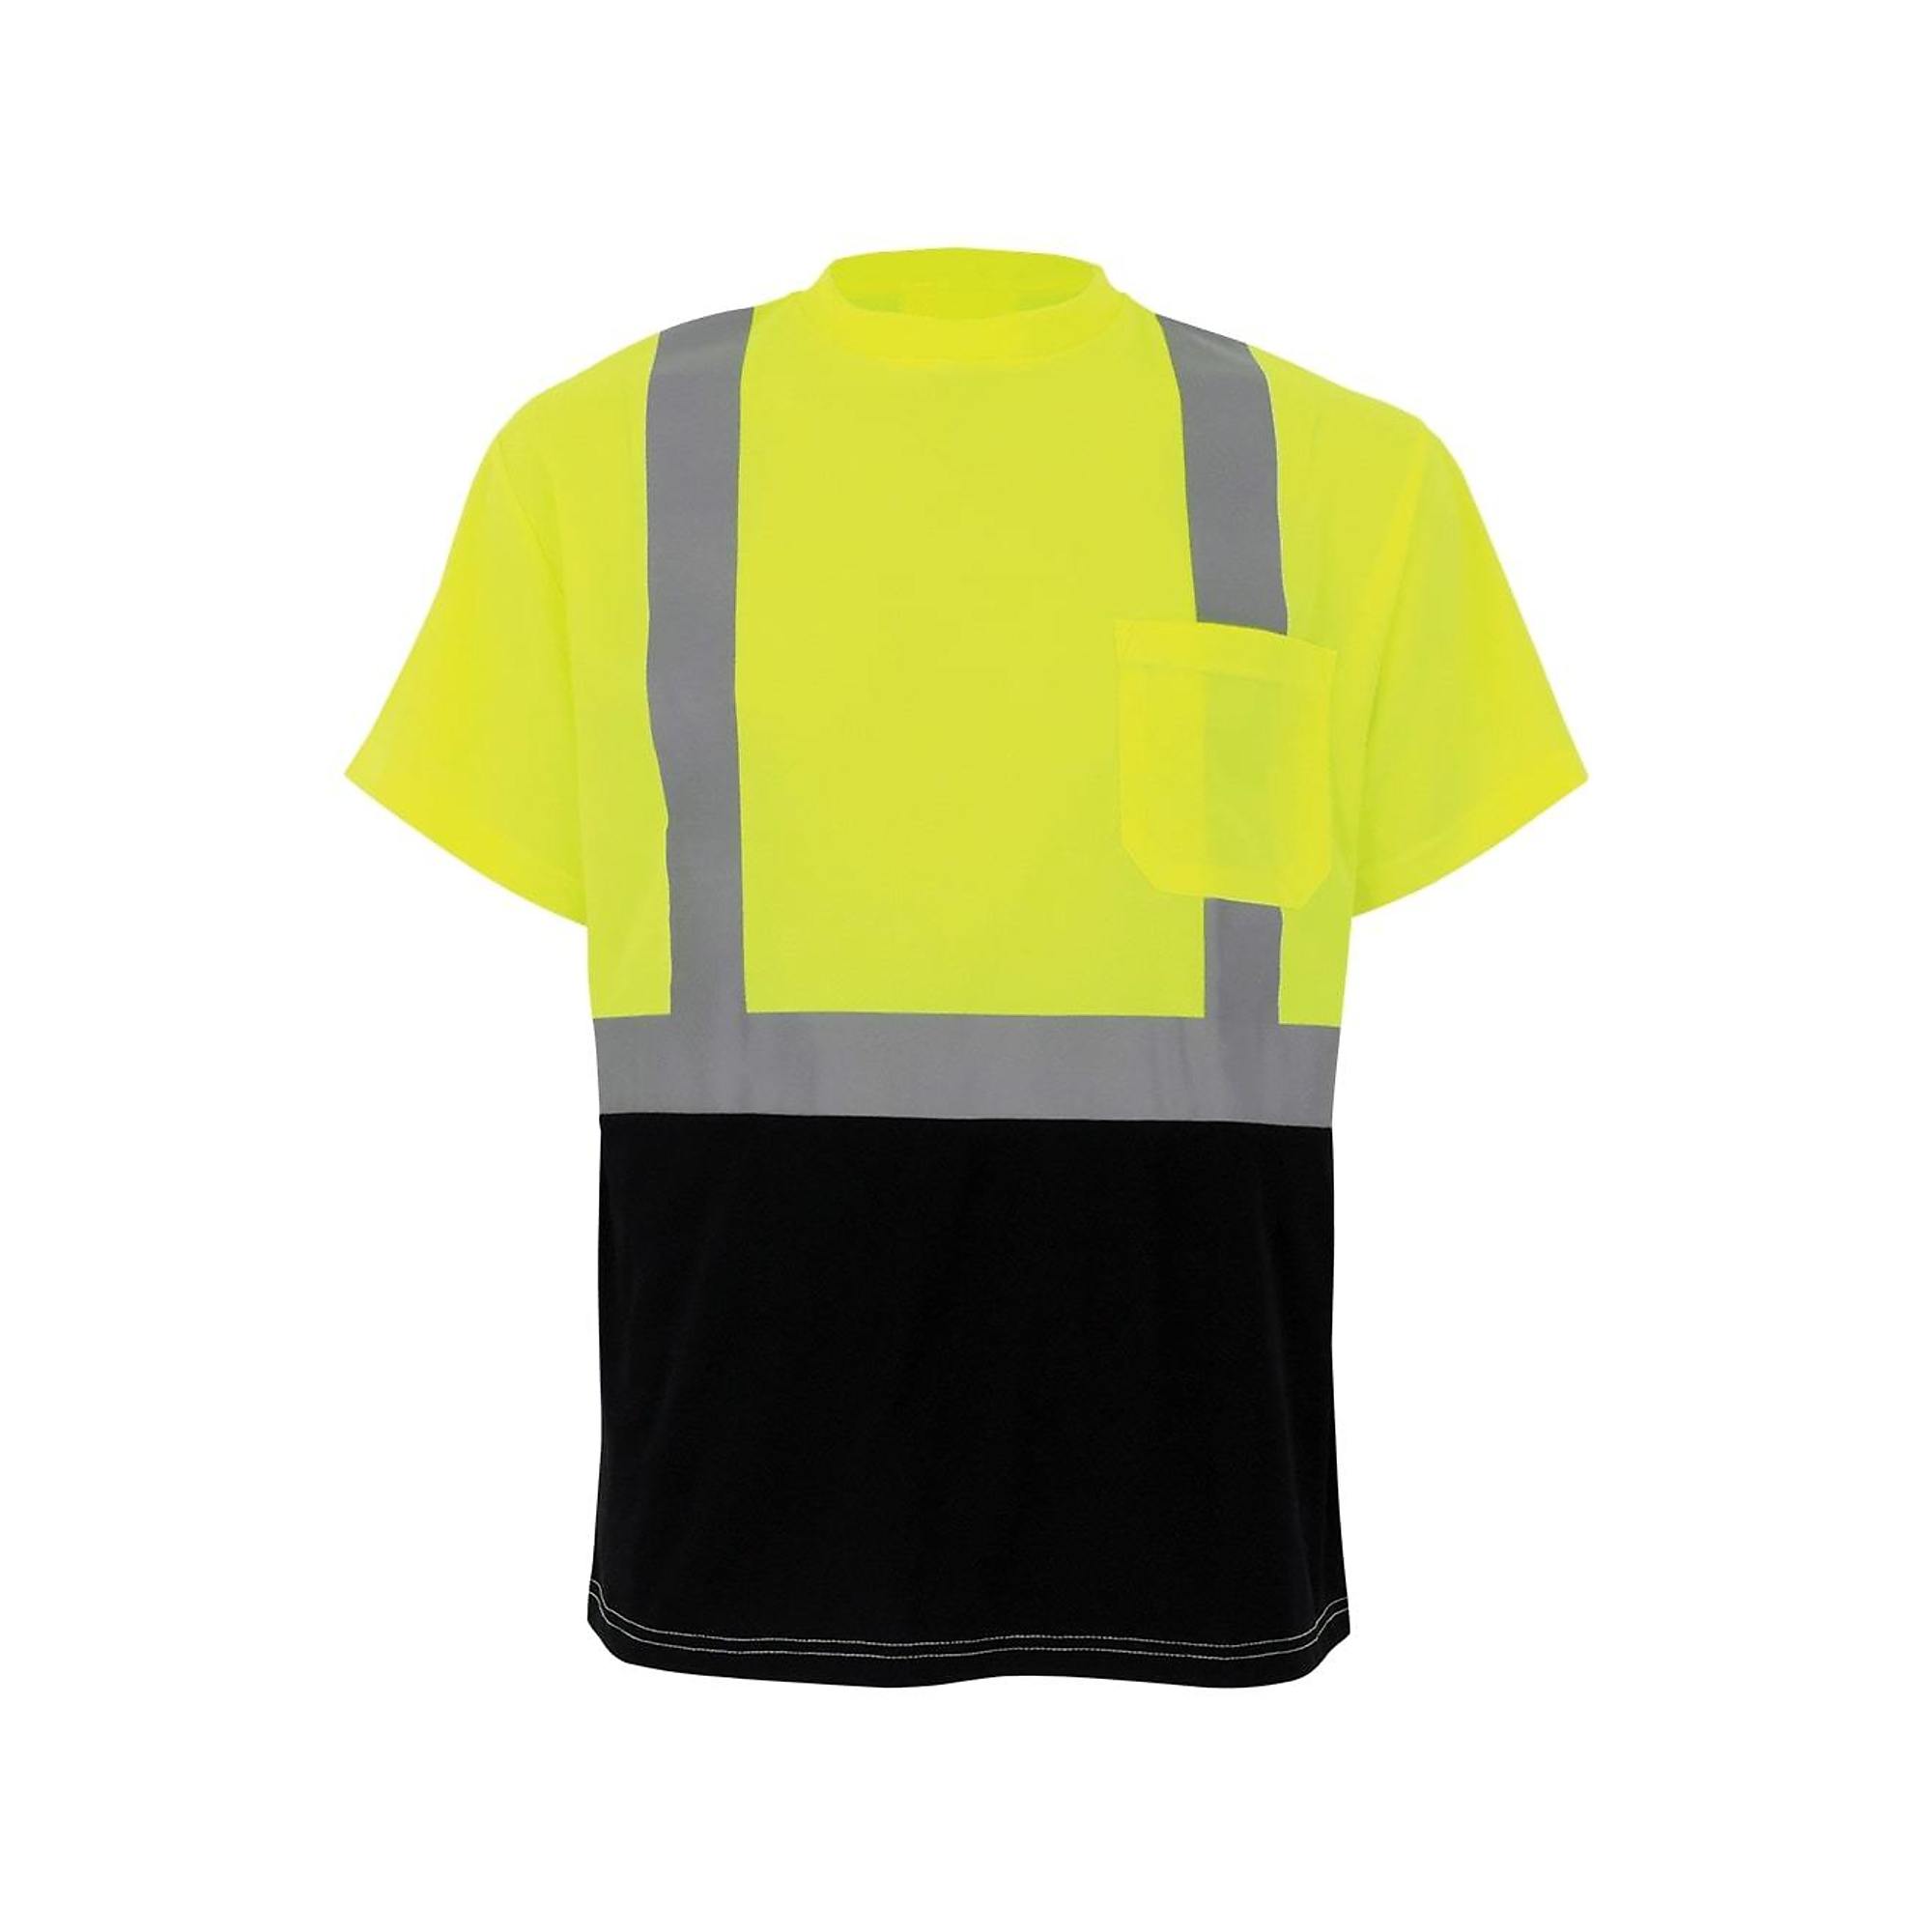 FrogWear, HV Yellow/Green, Class 2 Self-Wicking, Short-Sleeve Shirt, Size XL, Model GLO-007B-XL